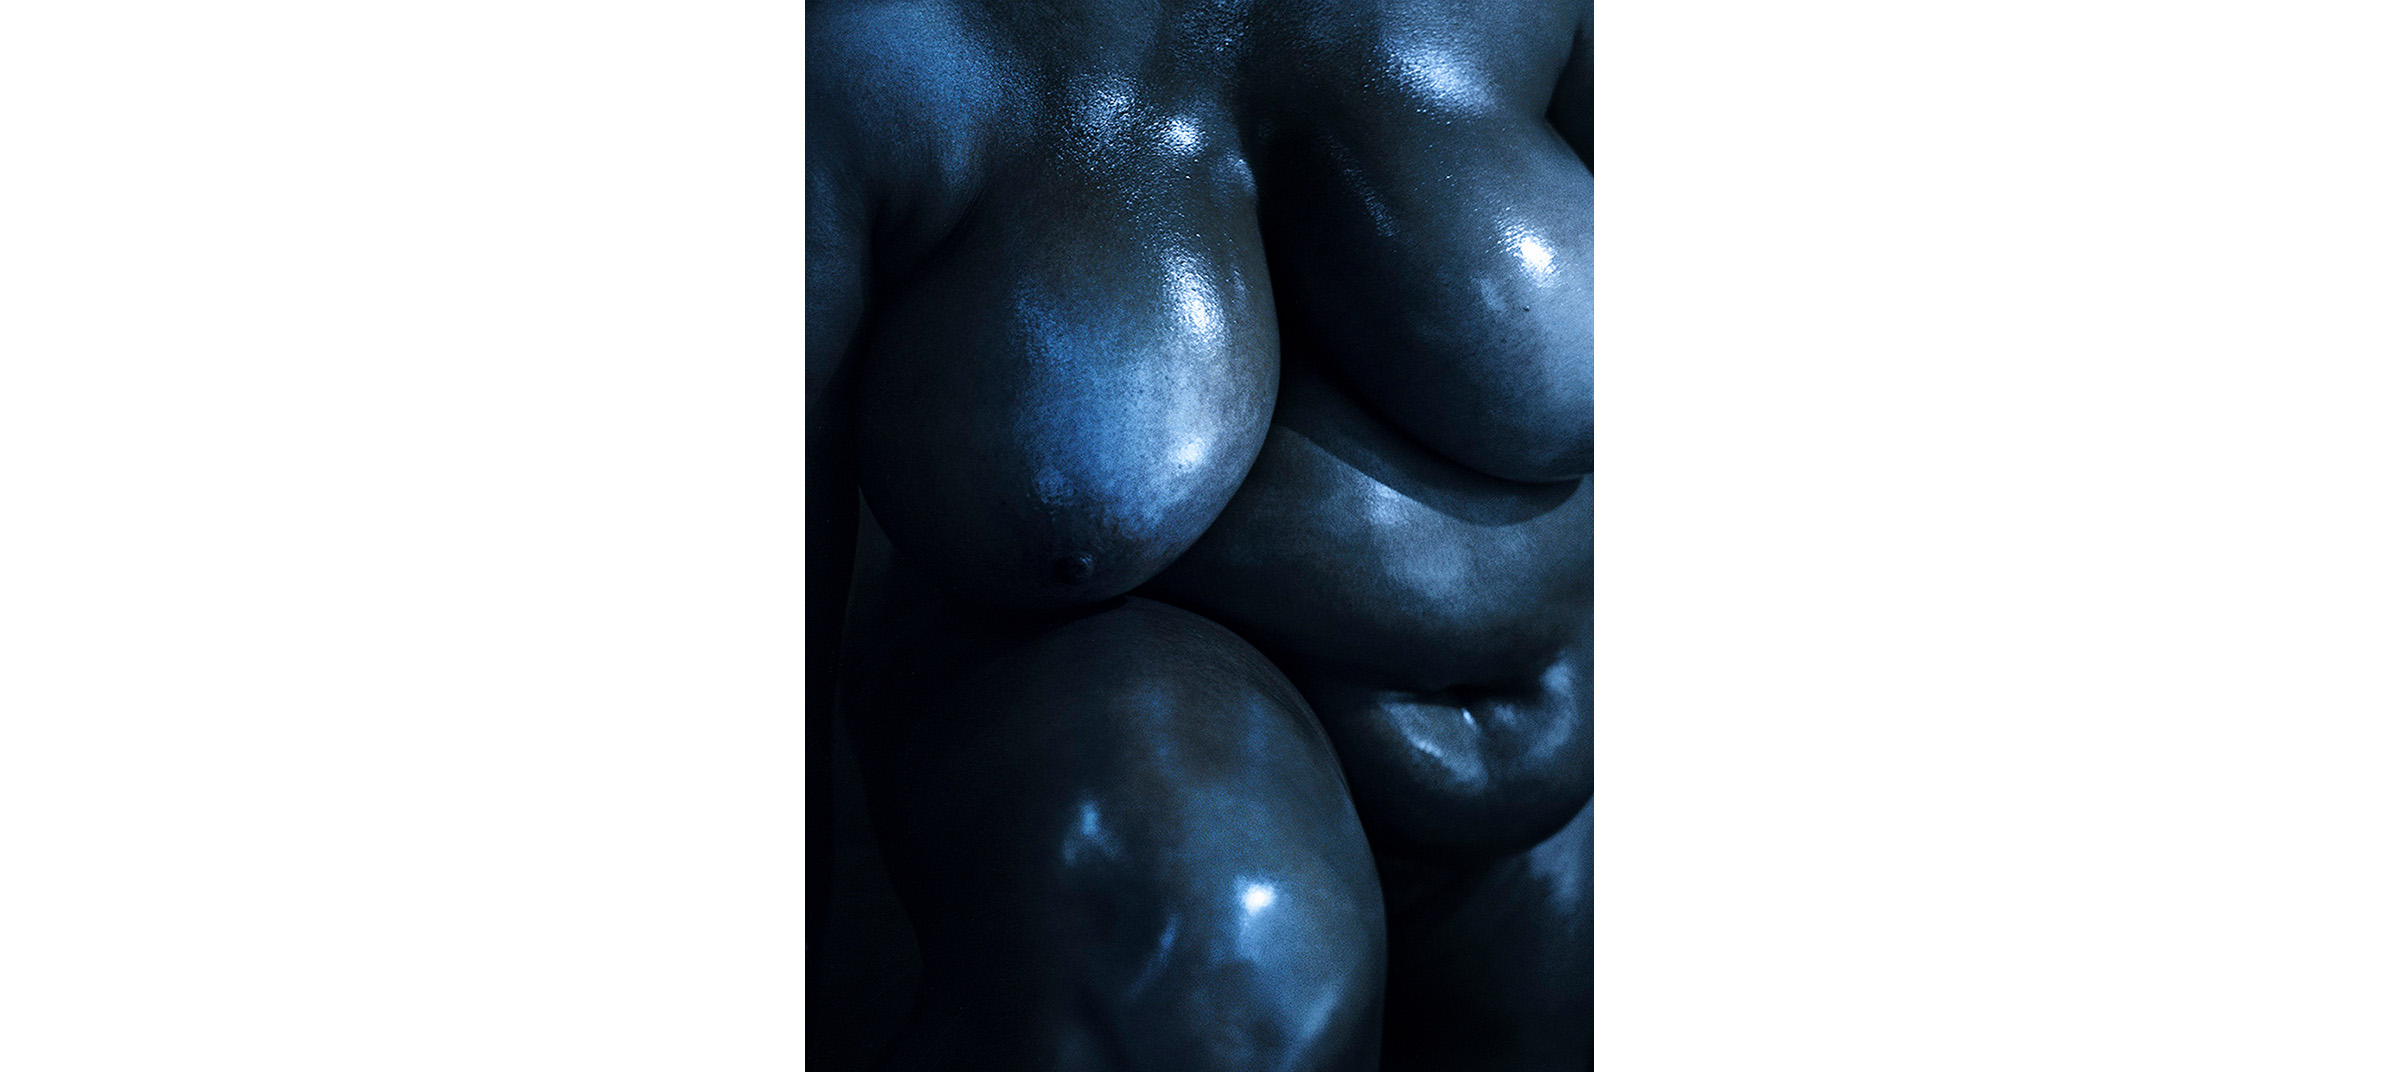   Blue Nudes  Untitled N°3, 2005 Tirage gélatino argentique, 144 x 104 cm | Gelatin silver print 56,59 x 40,94 inches  5/5 